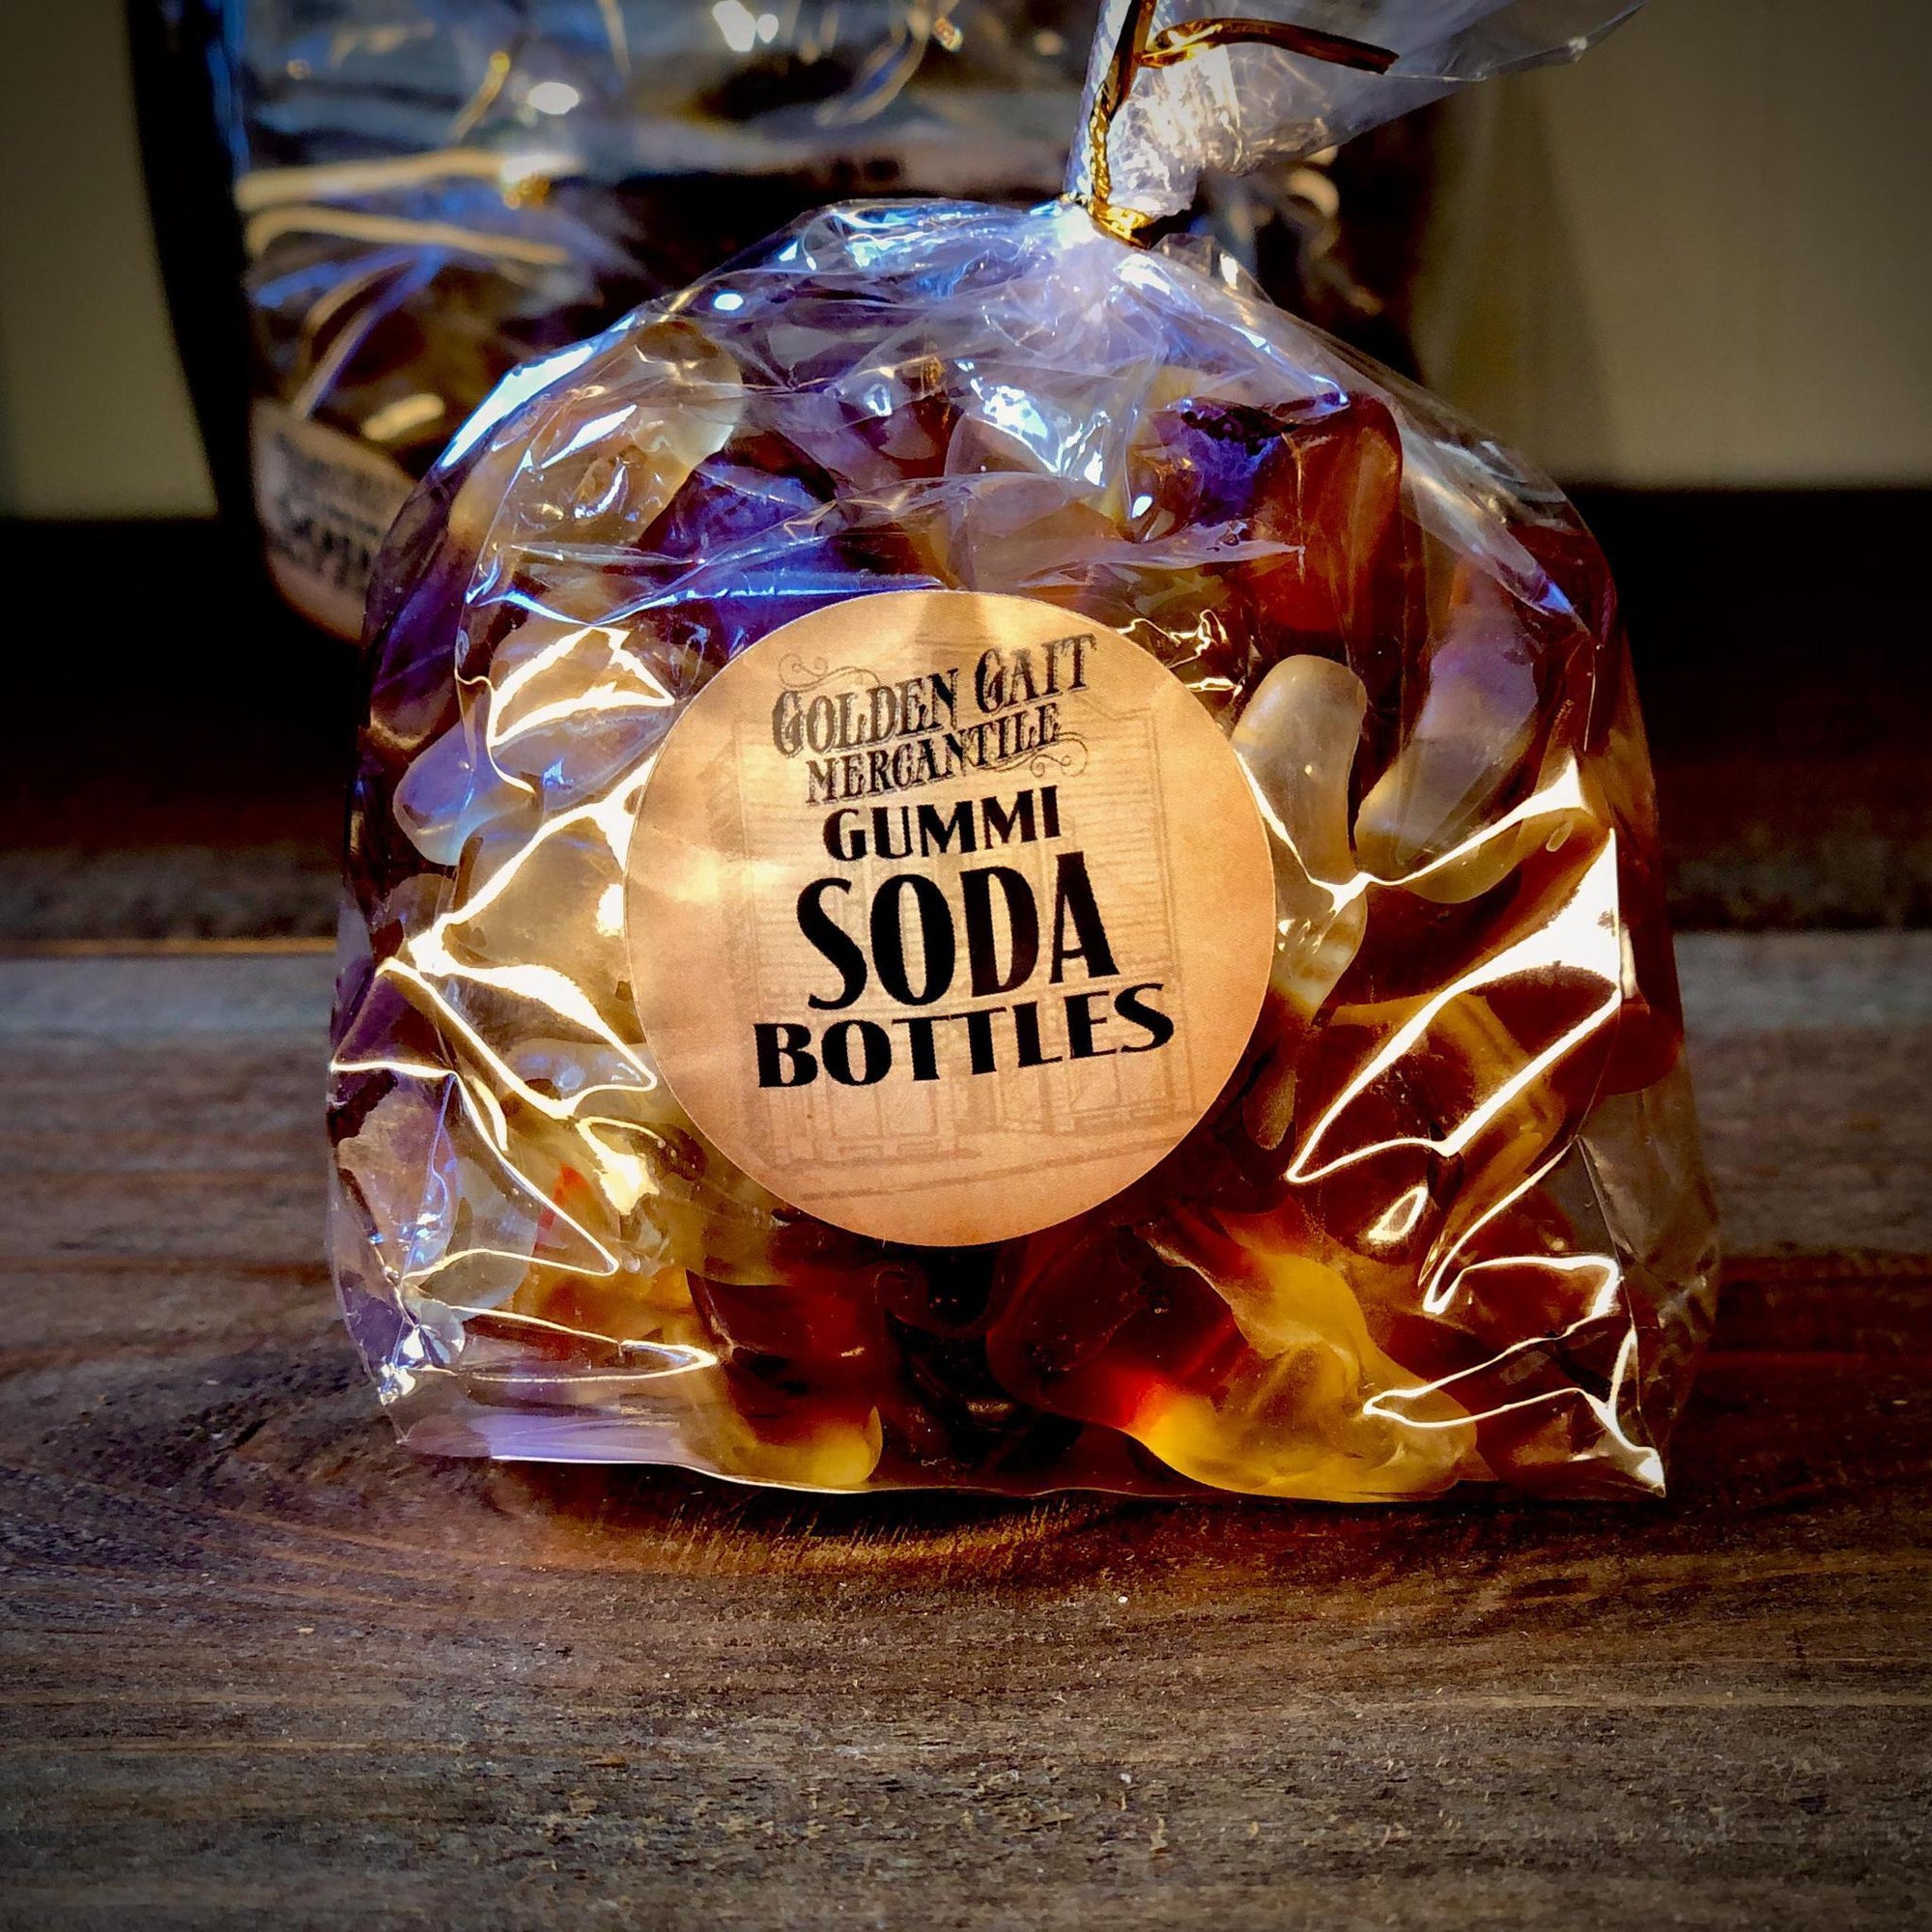 Gummi Candy Soda Bottles By The Golden Gait Mercantile